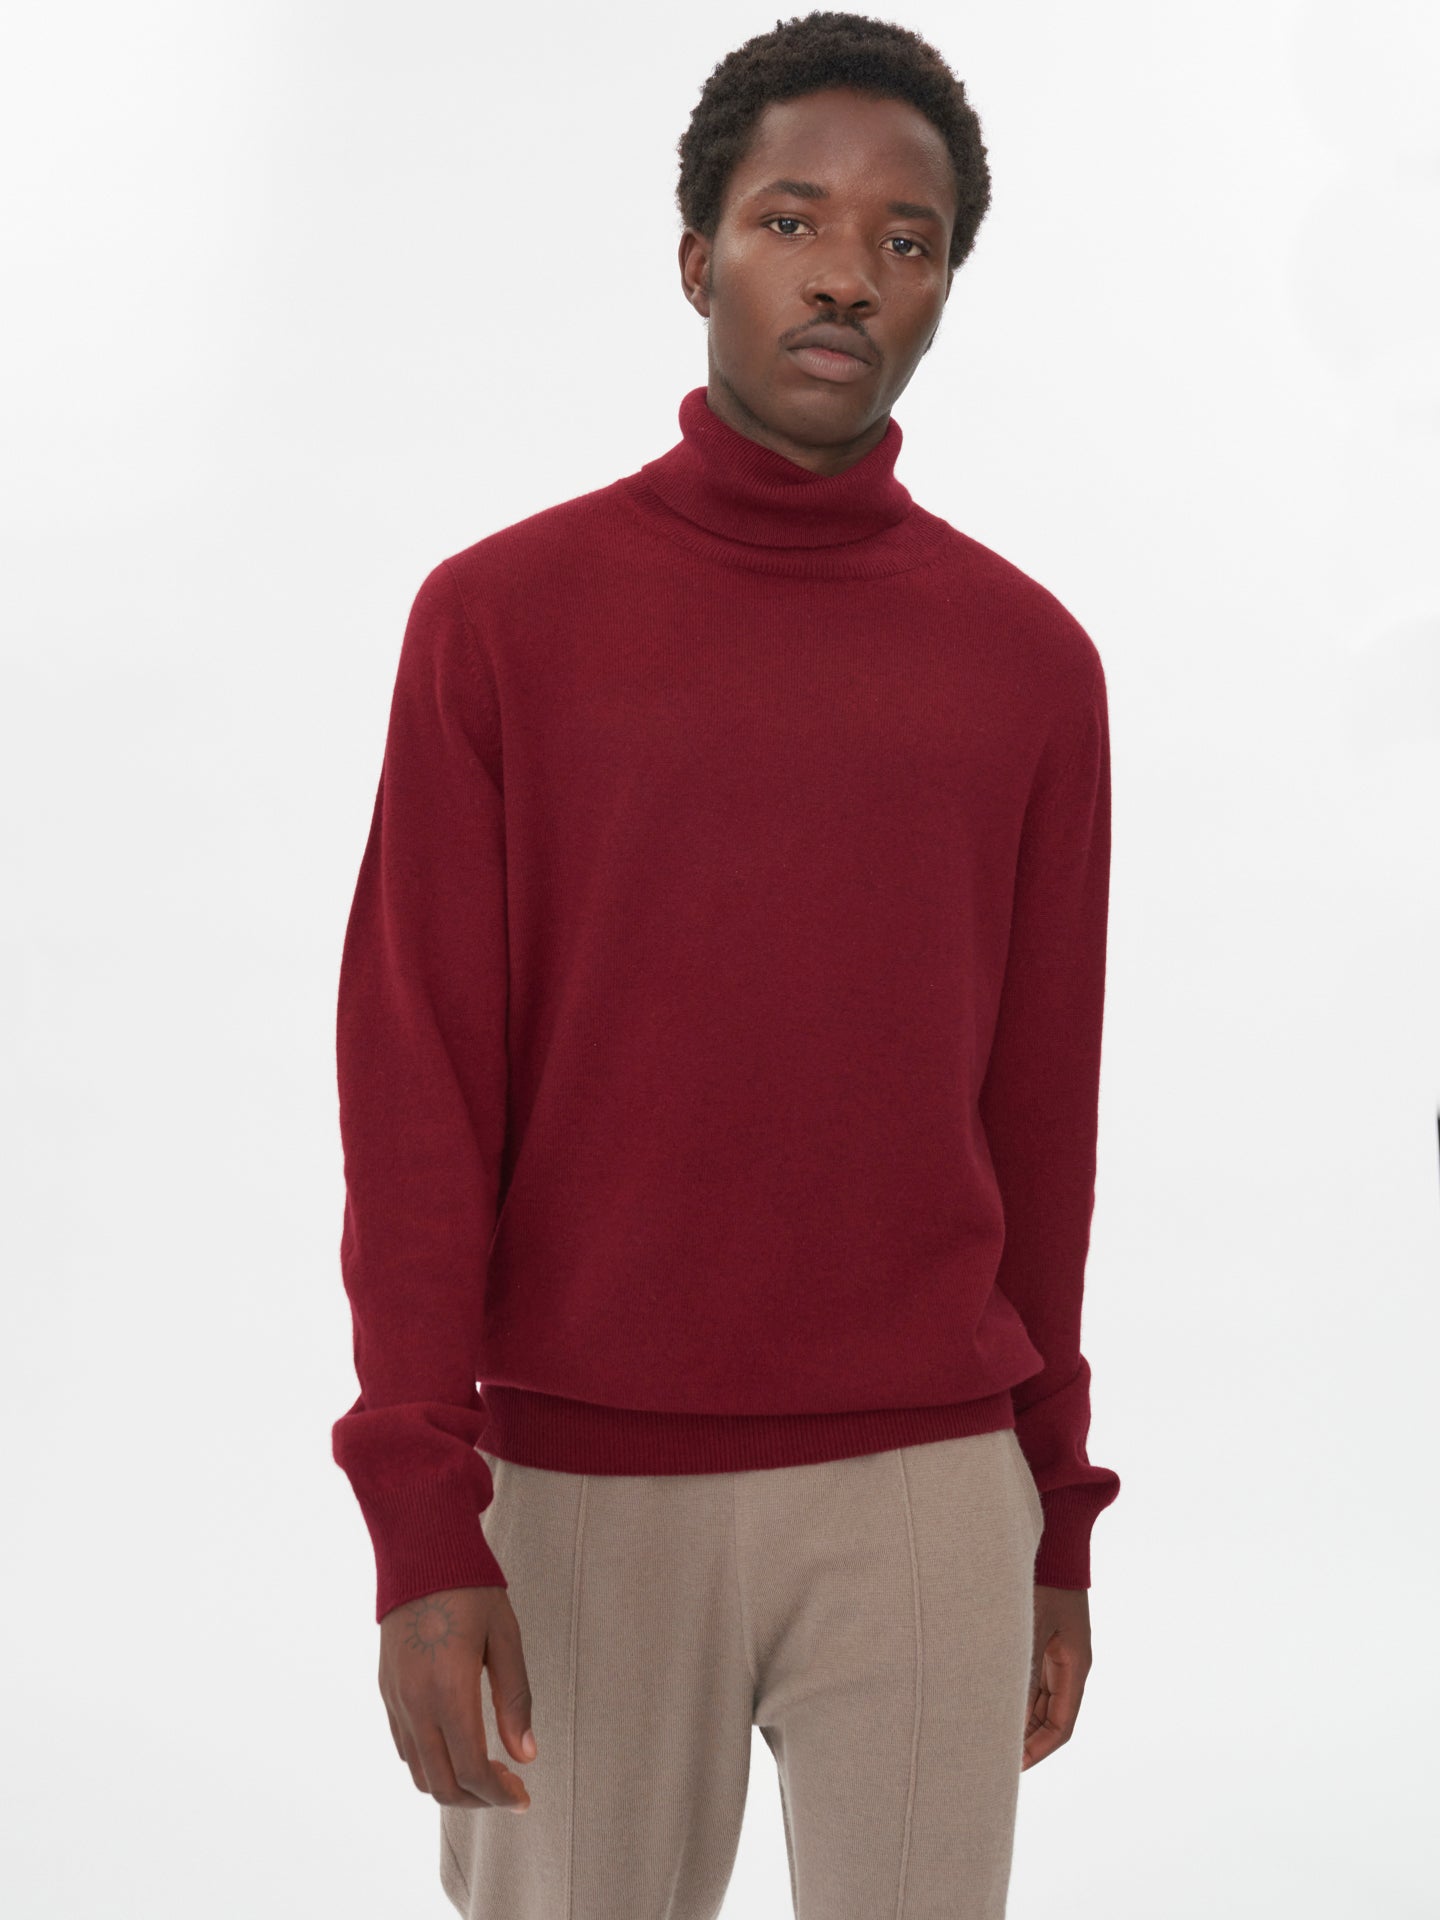 Men's Cashmere Basic Turtleneck Sweater Red - Gobi Cashmere